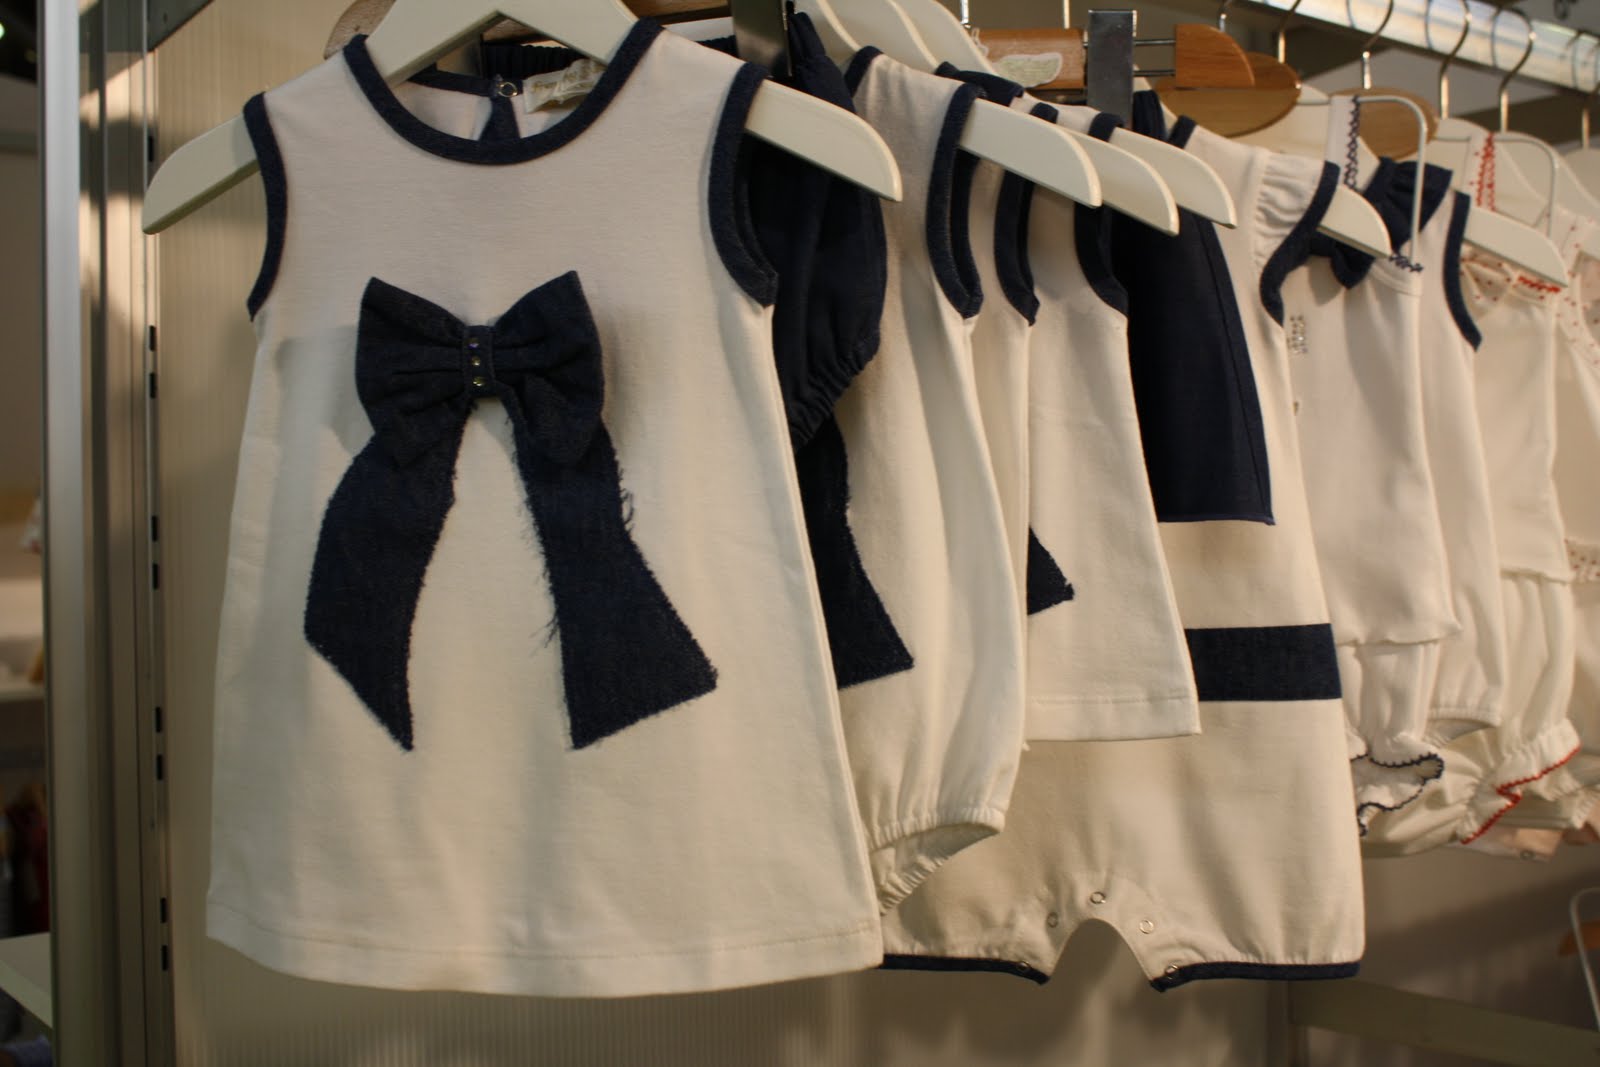 Infant Sailor Dresses